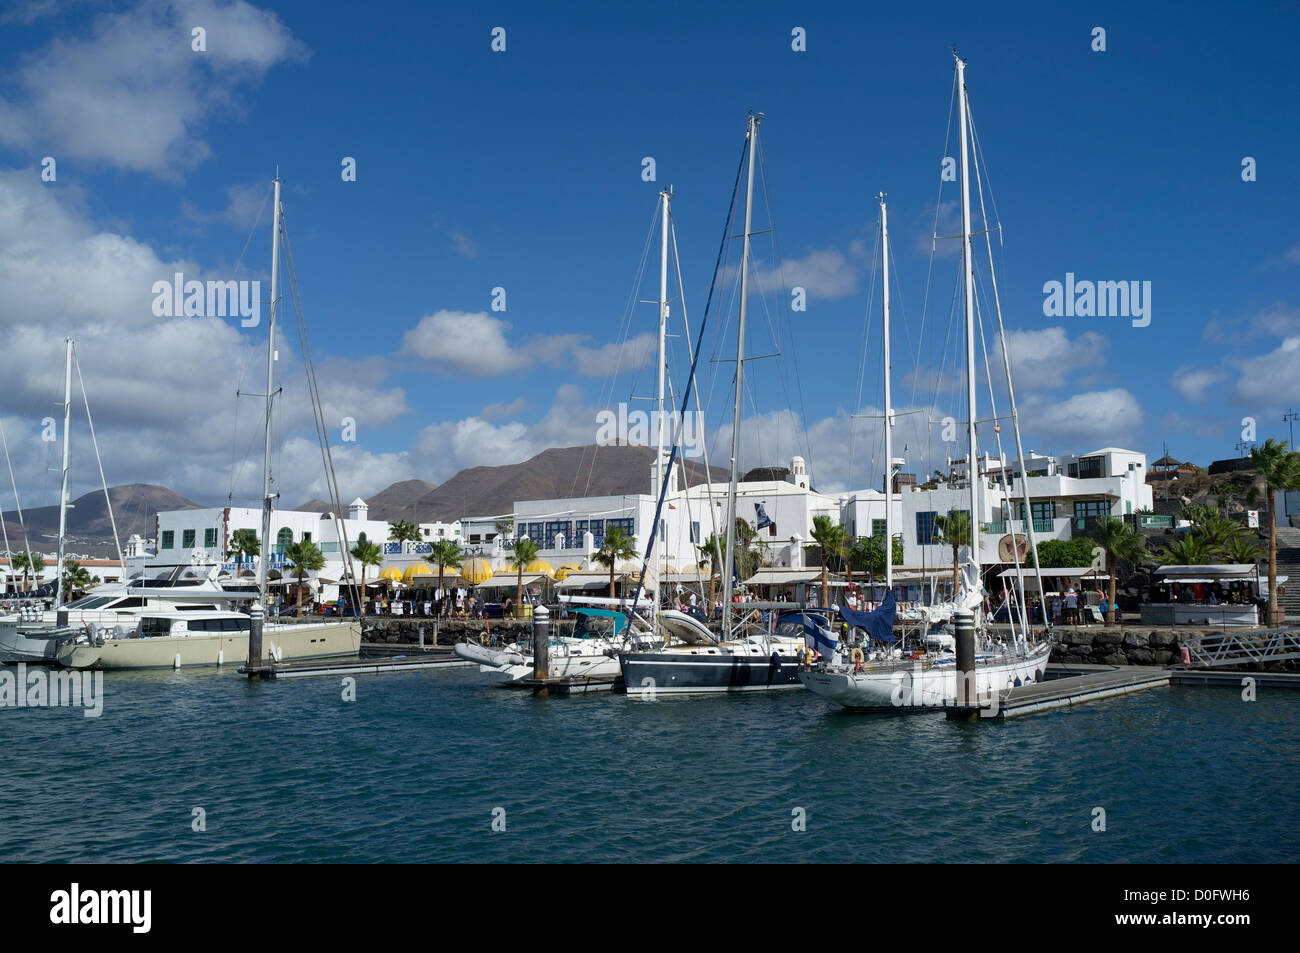 dh Marina Rubicon PLAYA BLANCA LANZAROTE Luxury yachts moored jetty harbour boats in marina Stock Photo